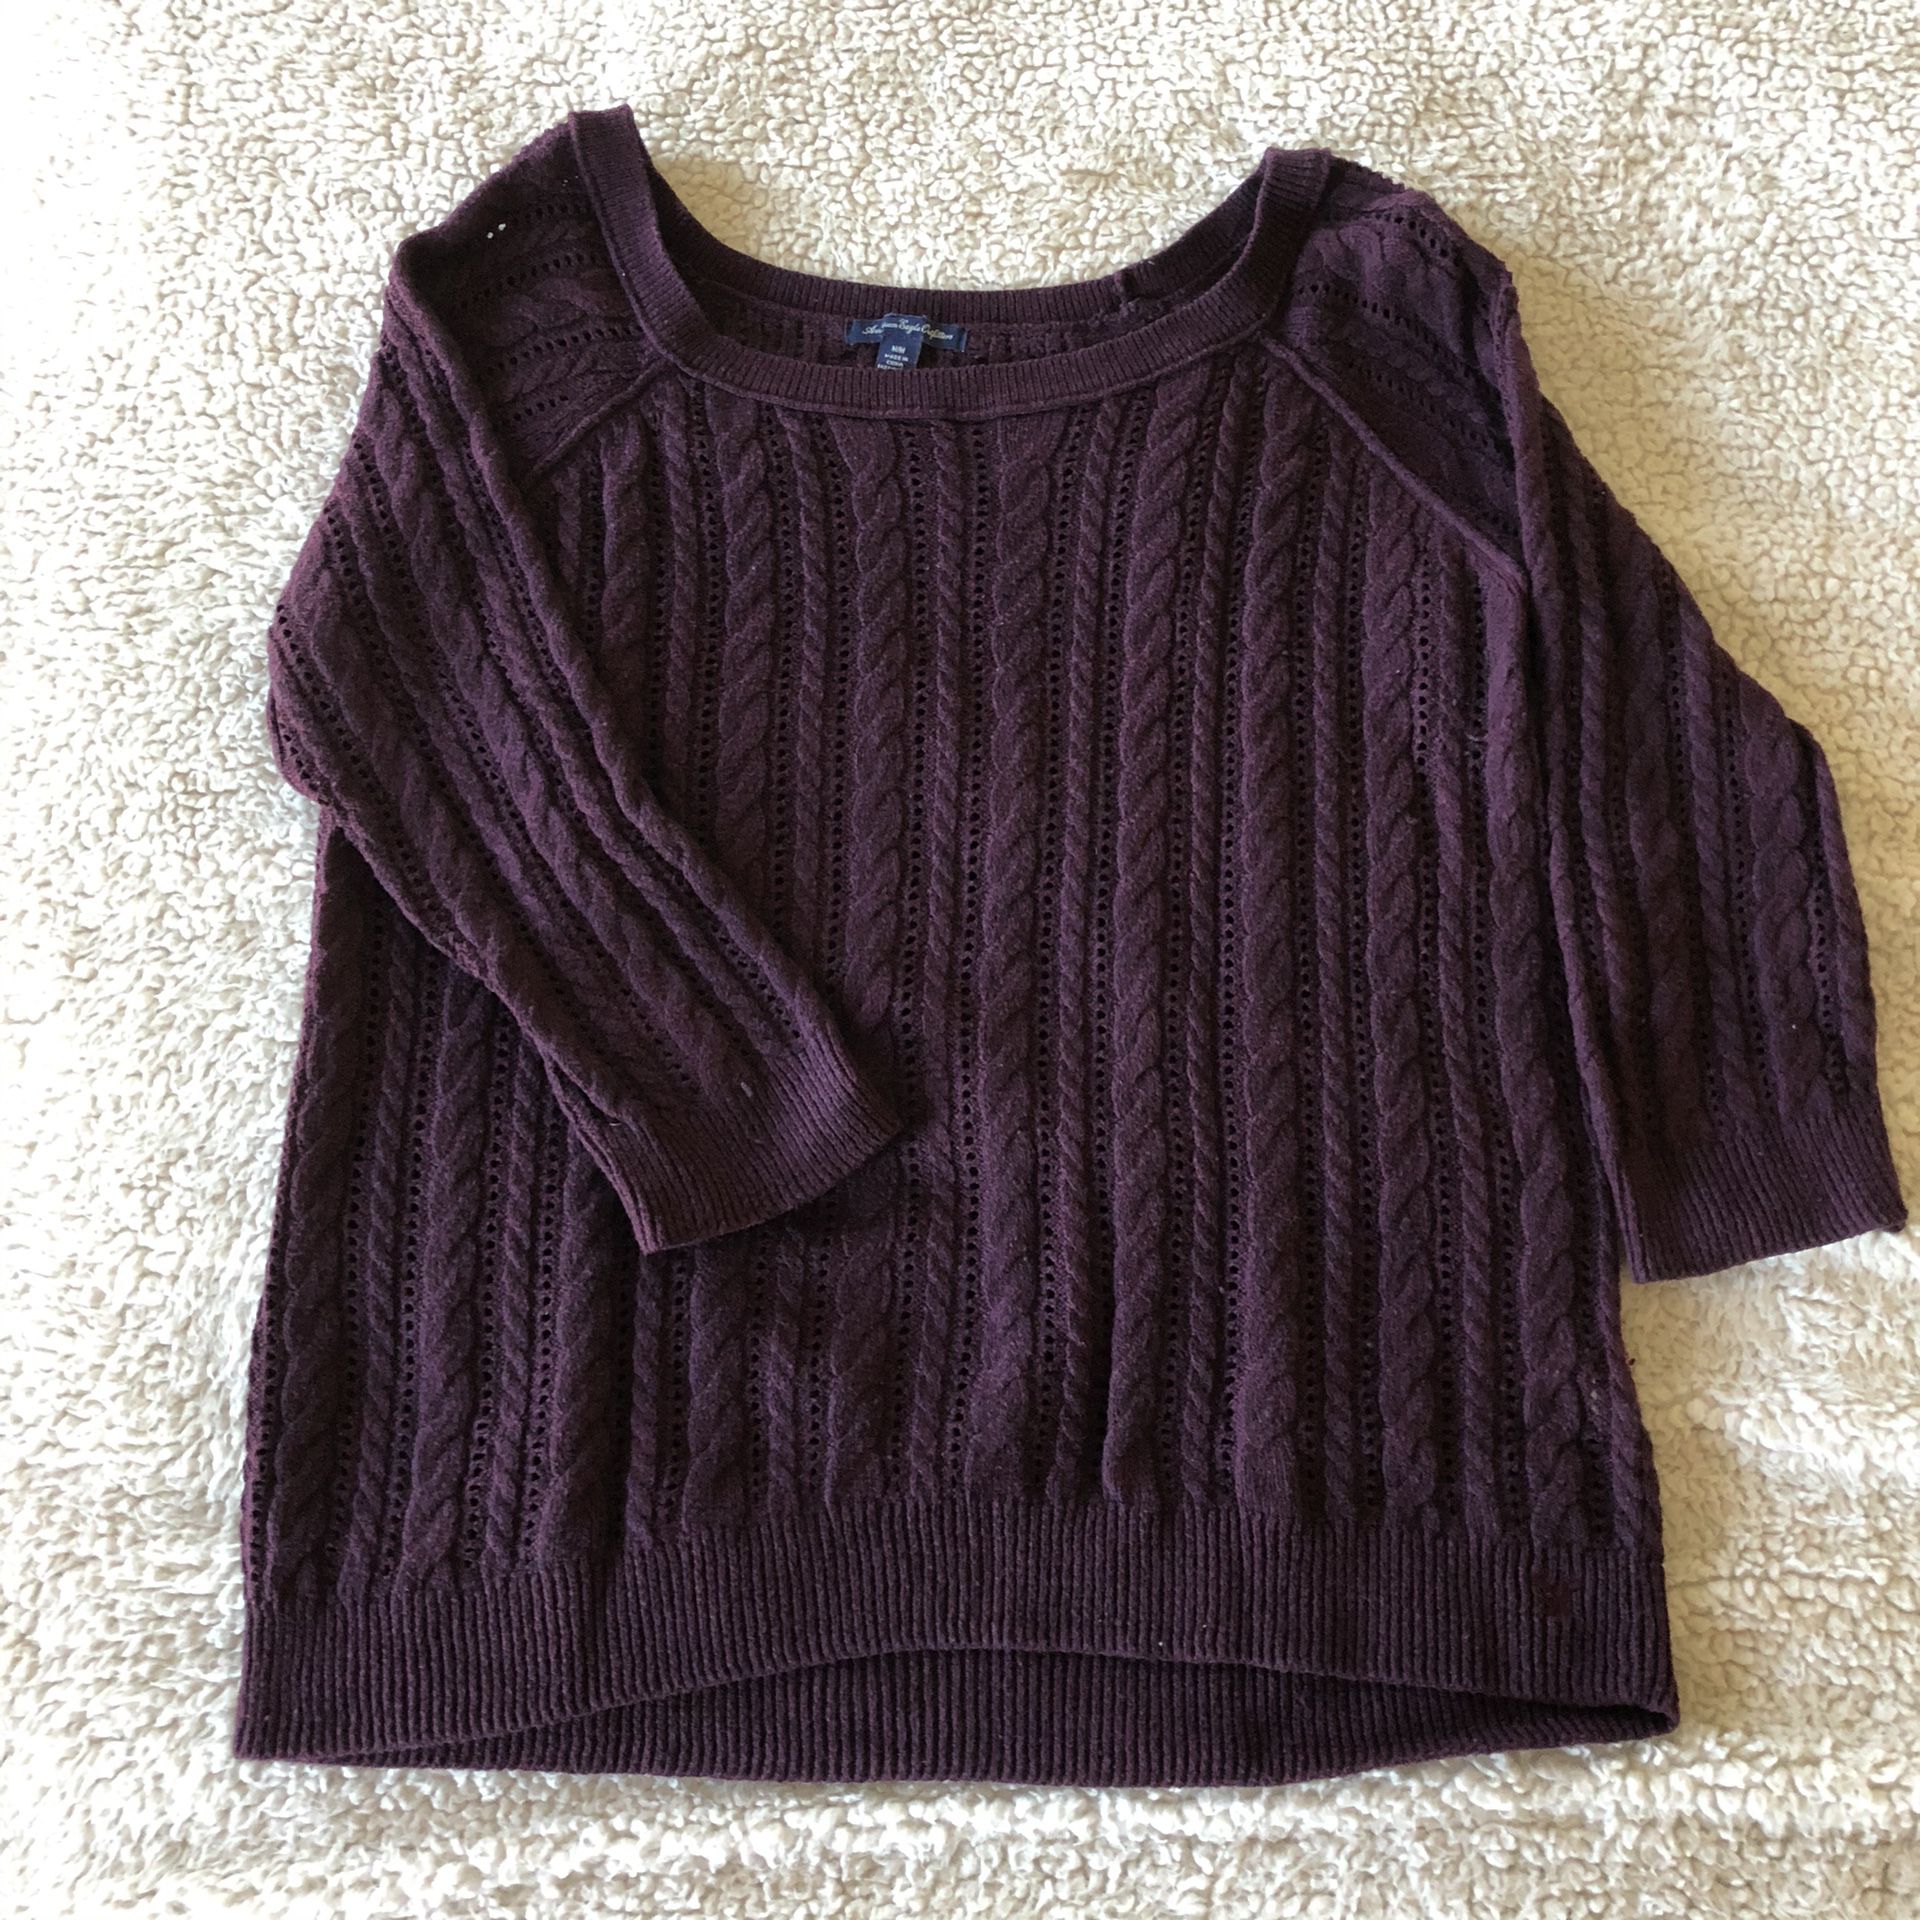 Size M American Eagle Purple Knit Sweater